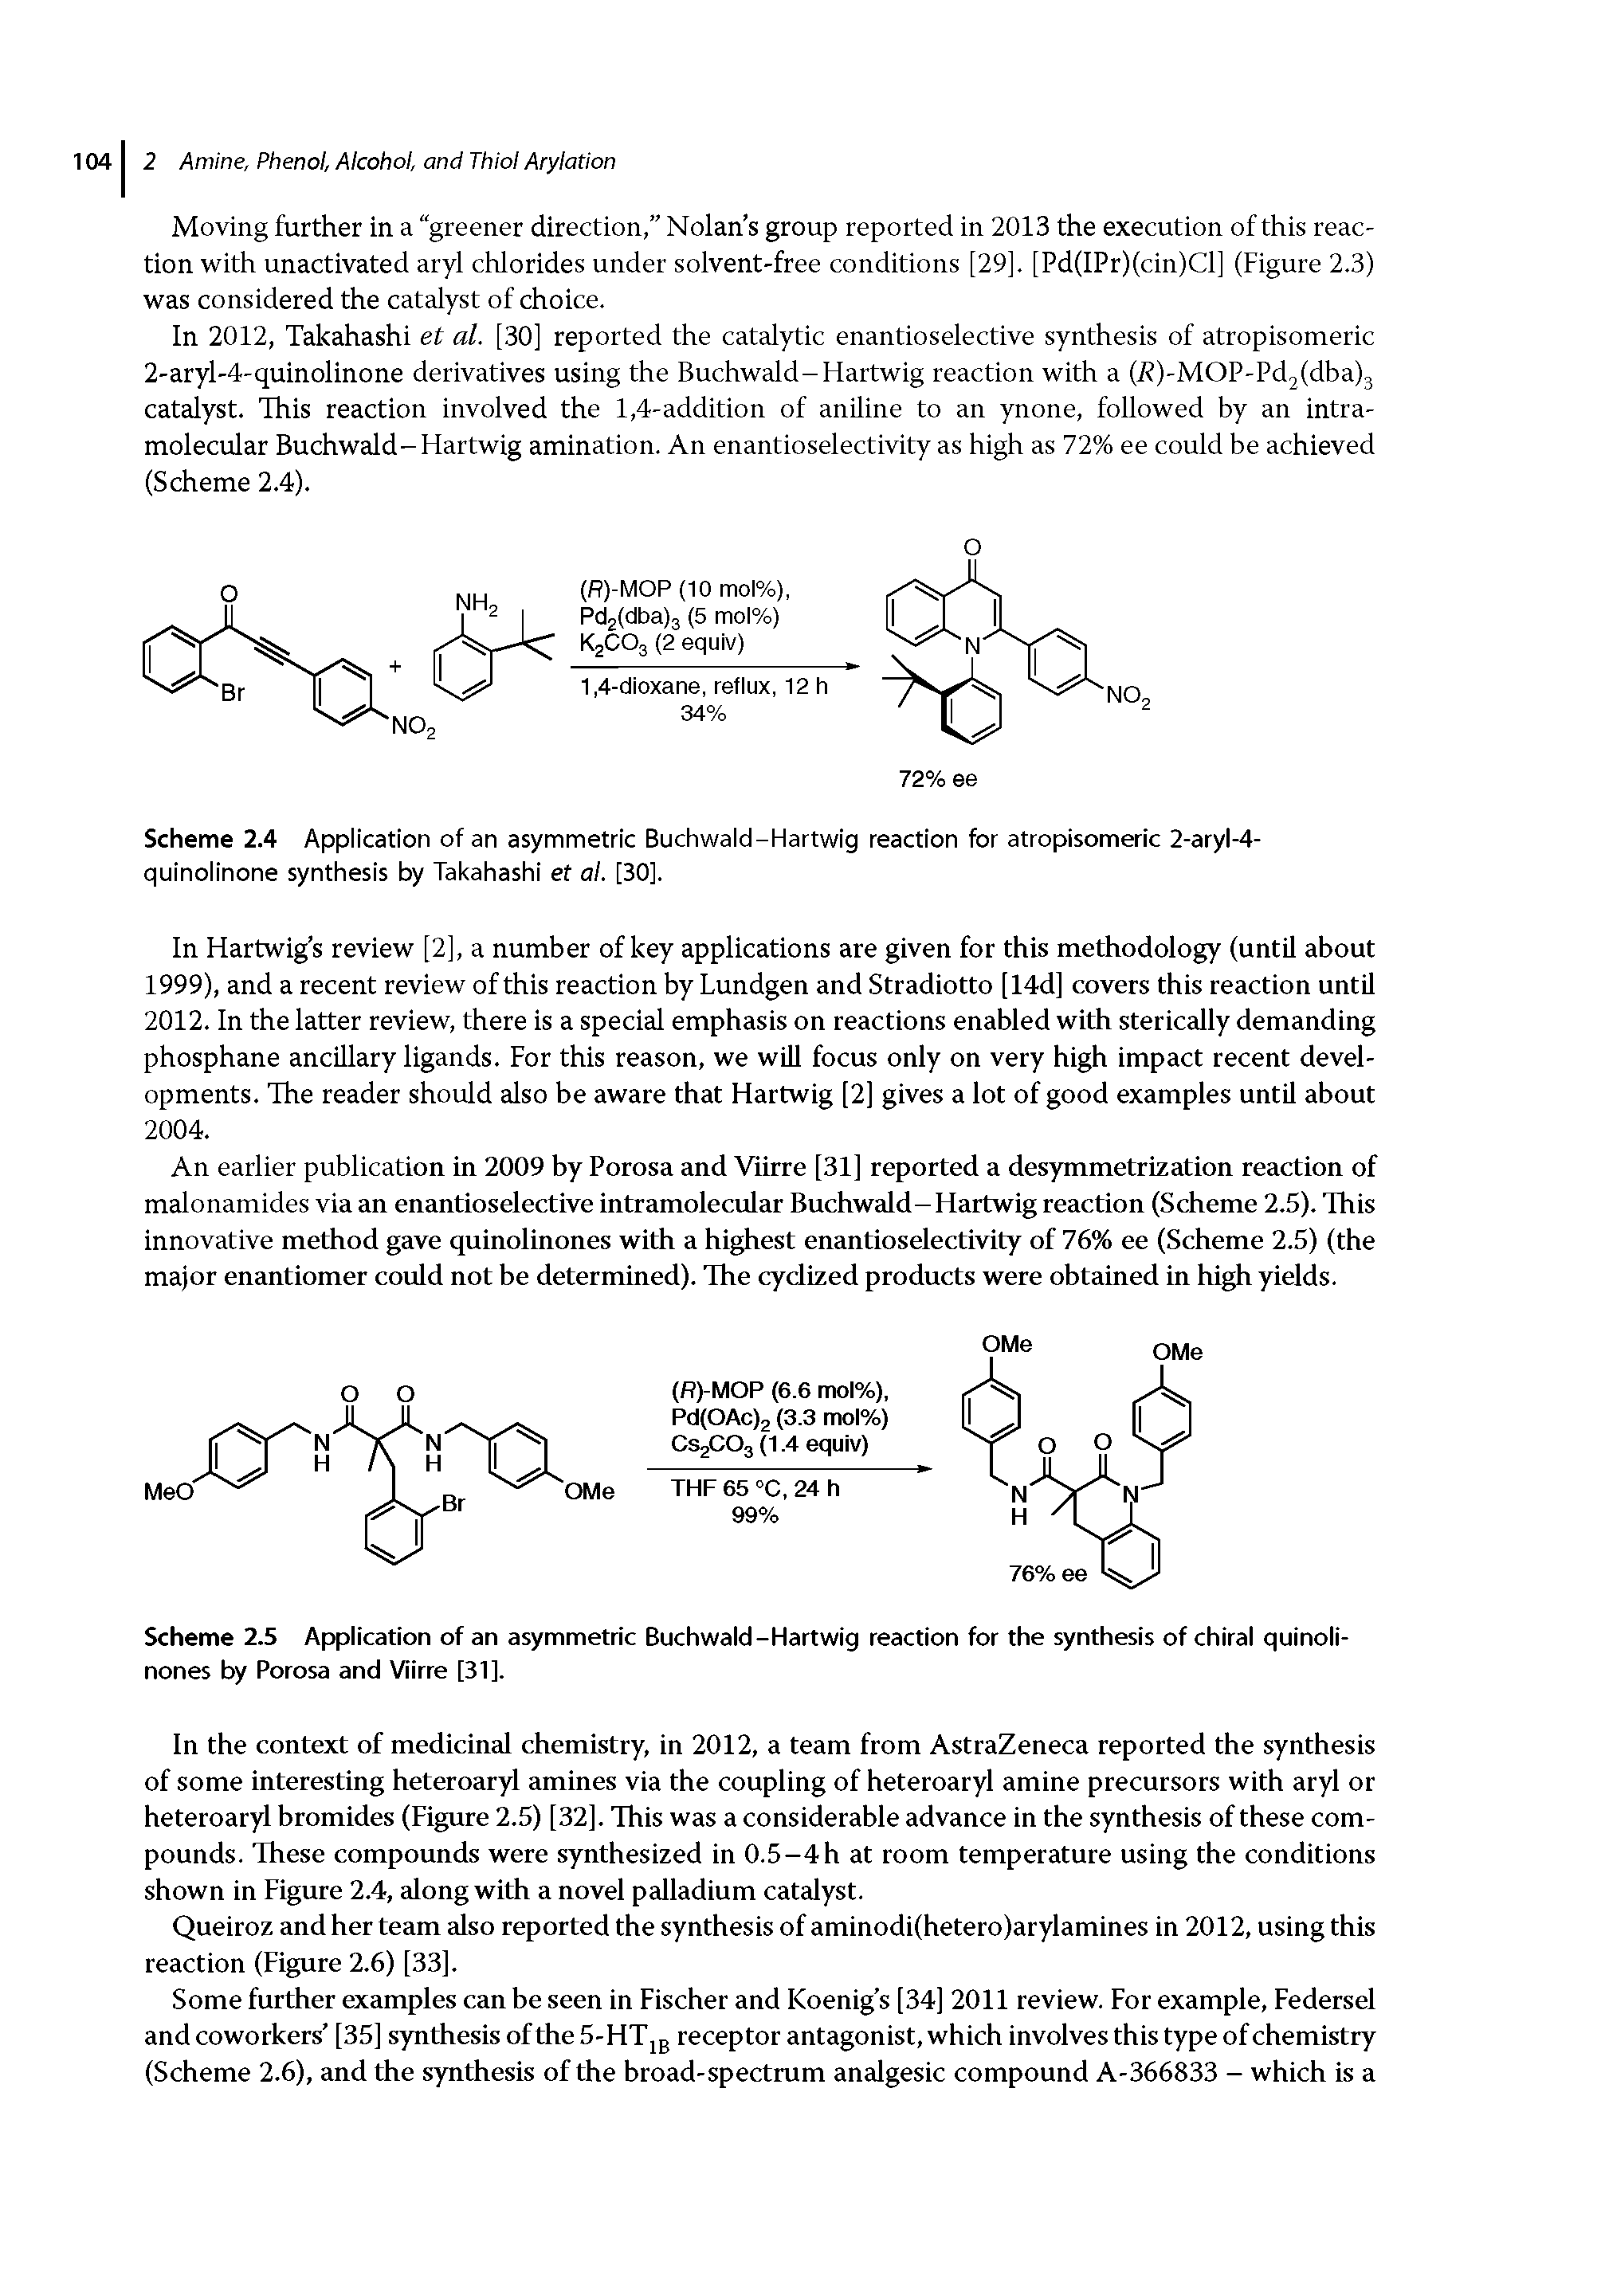 Scheme 2.4 Application of an asymmetric Buchwald-Hartwig reaction for atropisomeric 2-aryl-4-quinolinone synthesis by Takahashi ef al. [30].